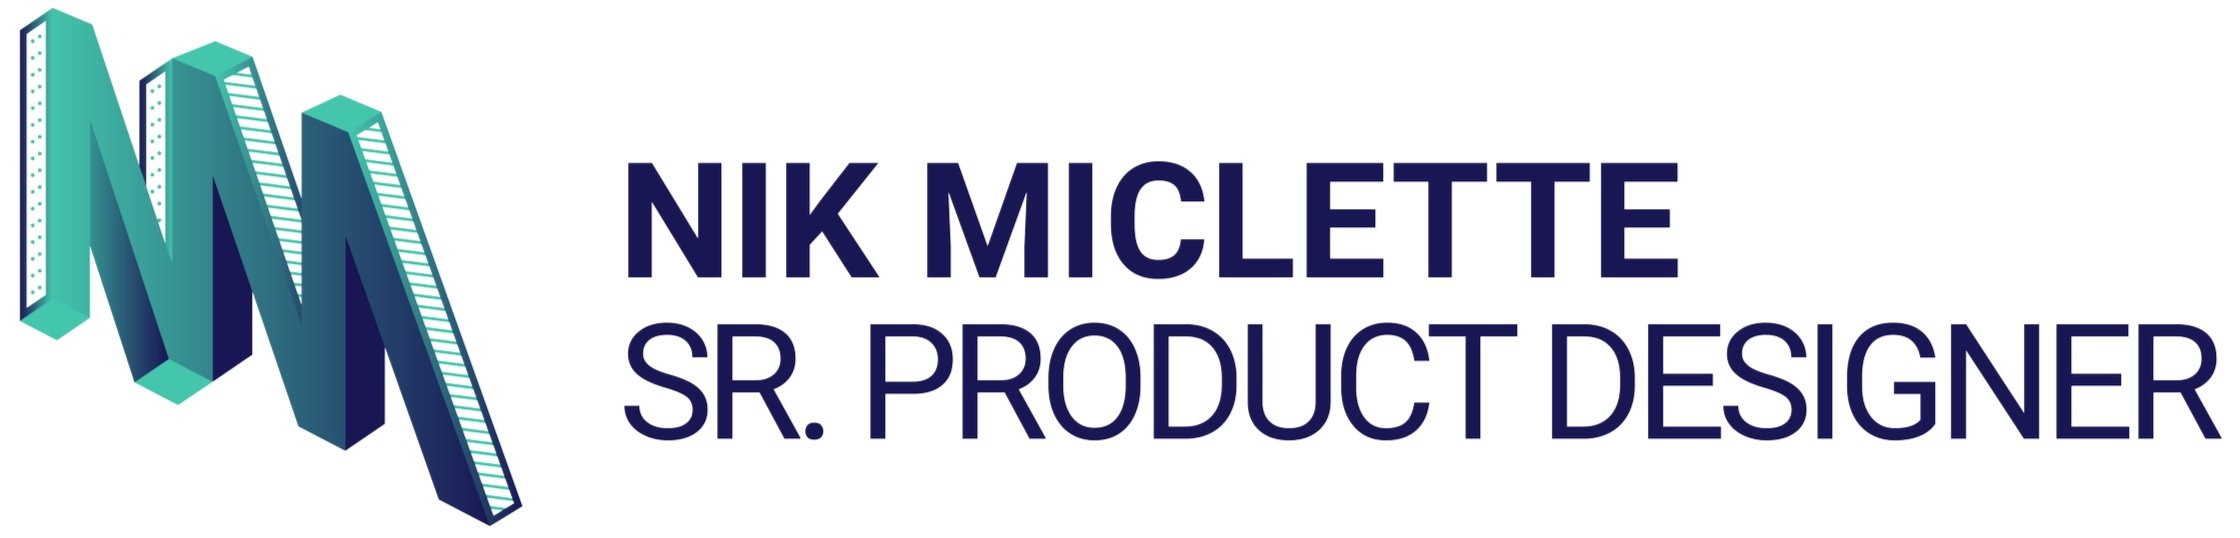 Nik Miclette | Senior Product Designer